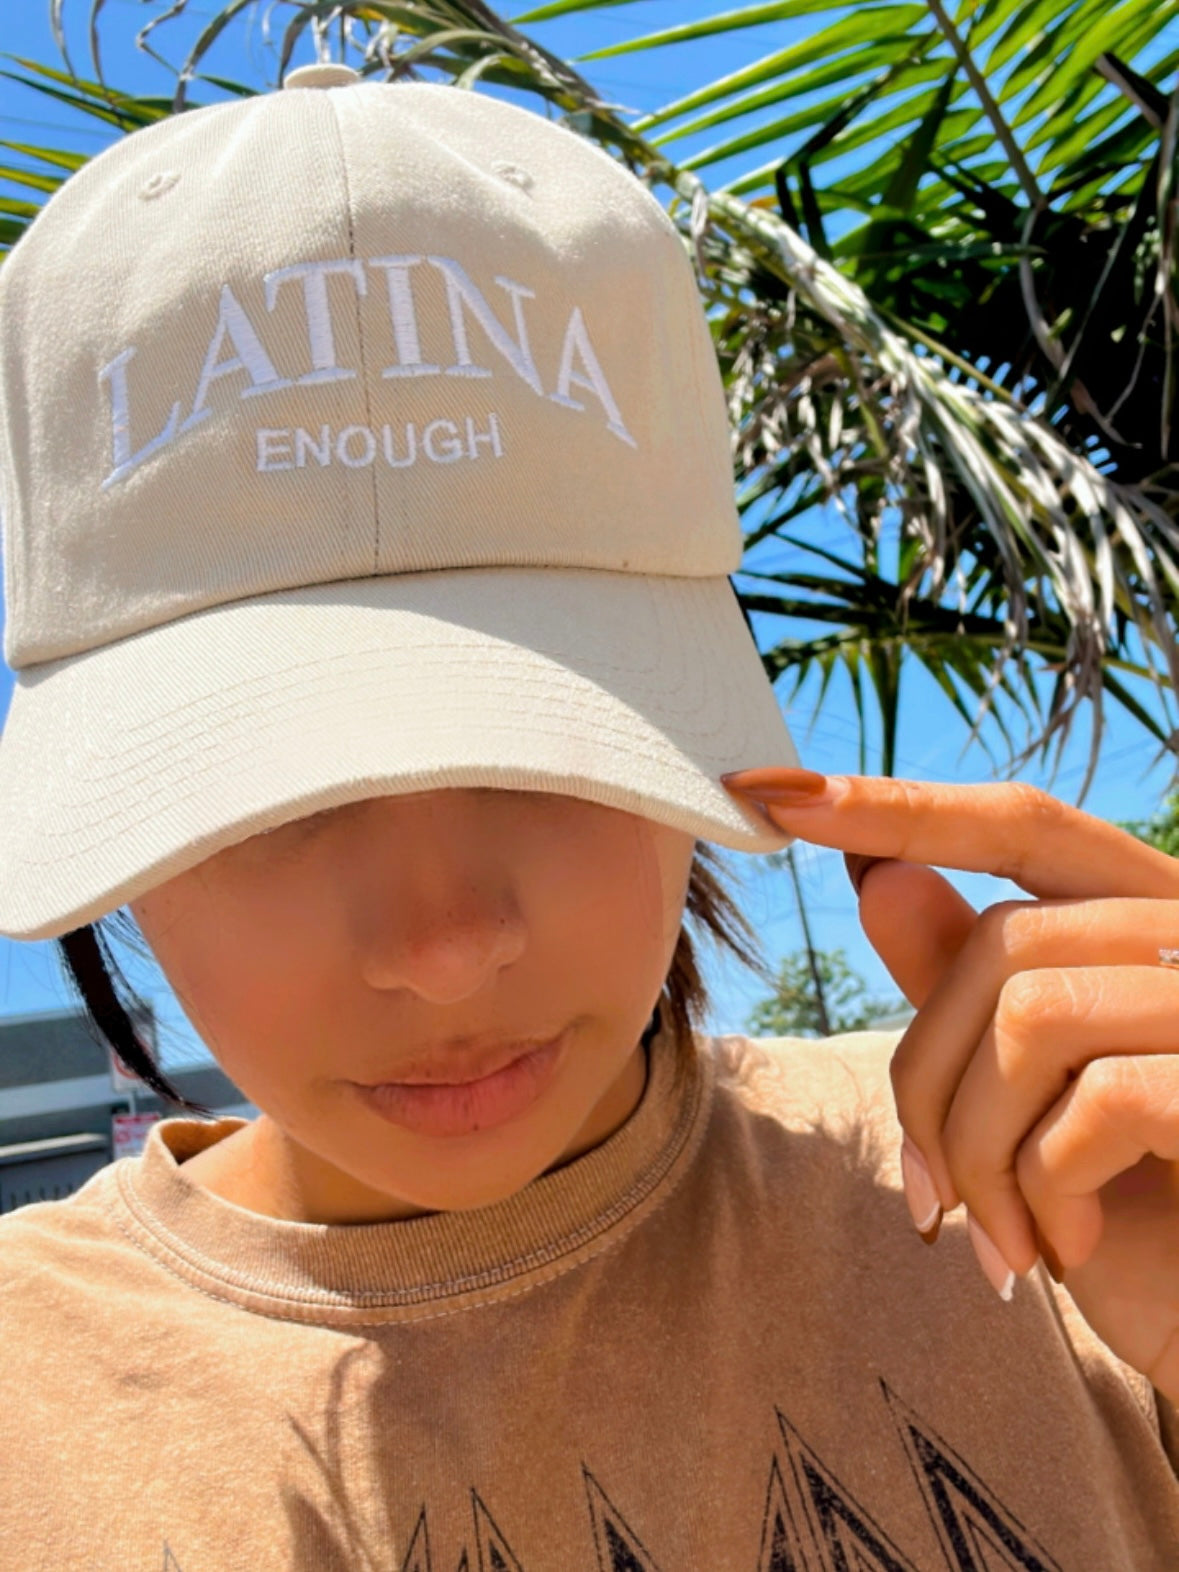 Latina Enough Dad Hat